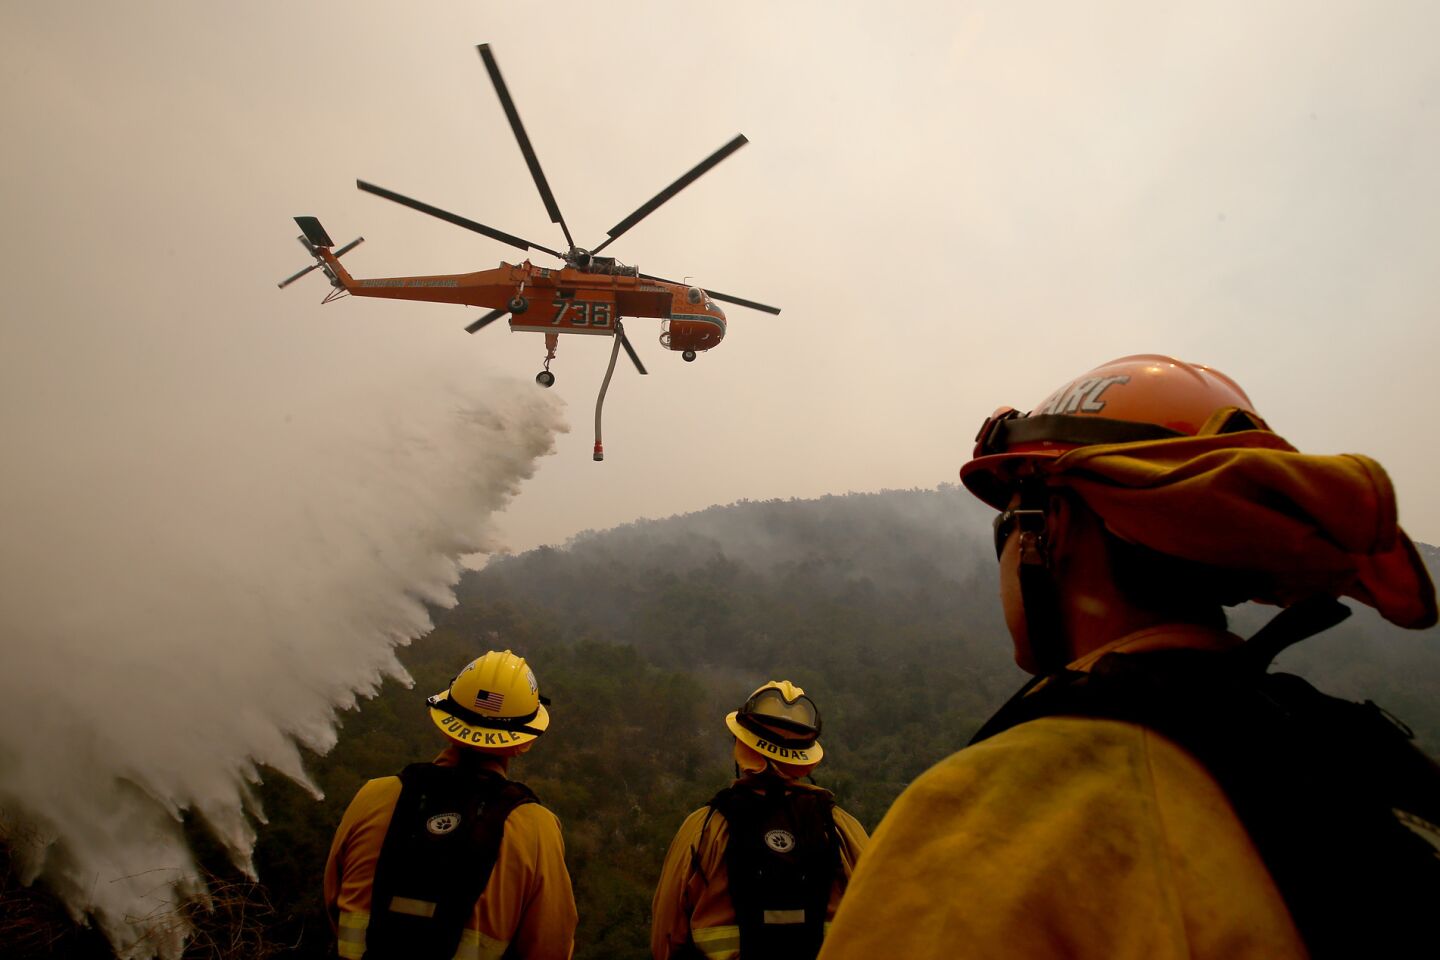 Wildfires across California